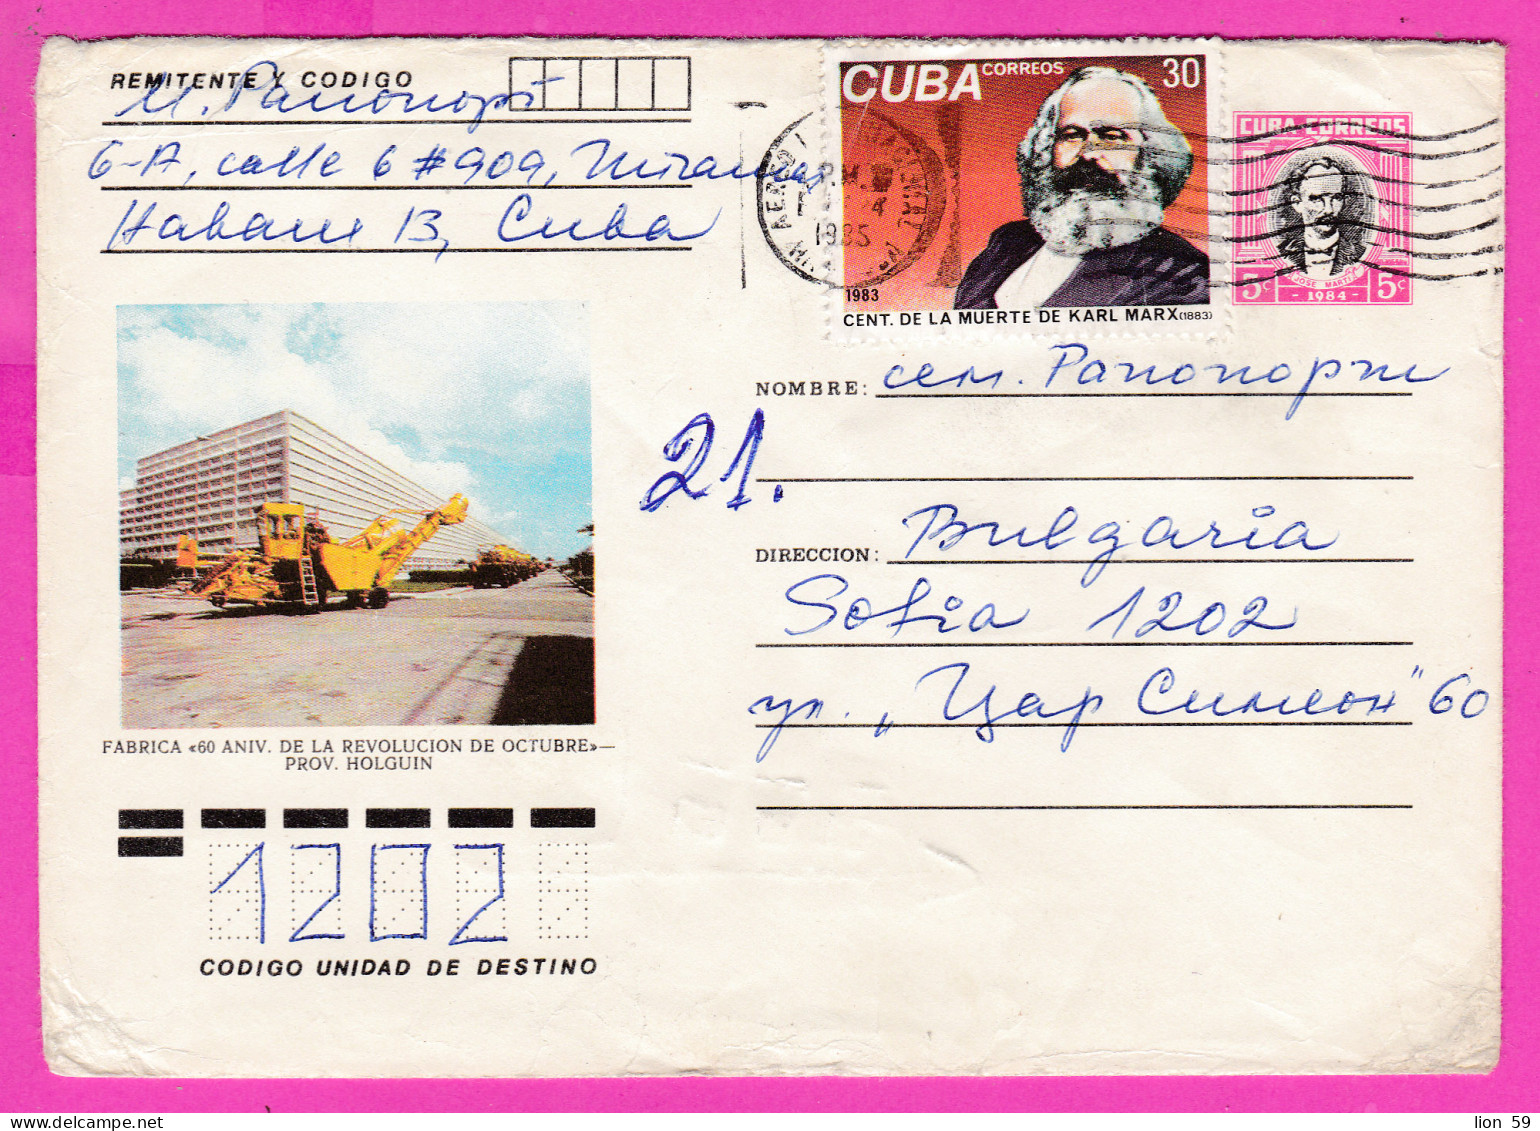 295967 / Cuba Stationery PSC 1985 Fabrica 60 Aniv. Revolucion Octubre Prov. Holguin" 5c (José Martí Poet) 30c Karl Marx - Karl Marx